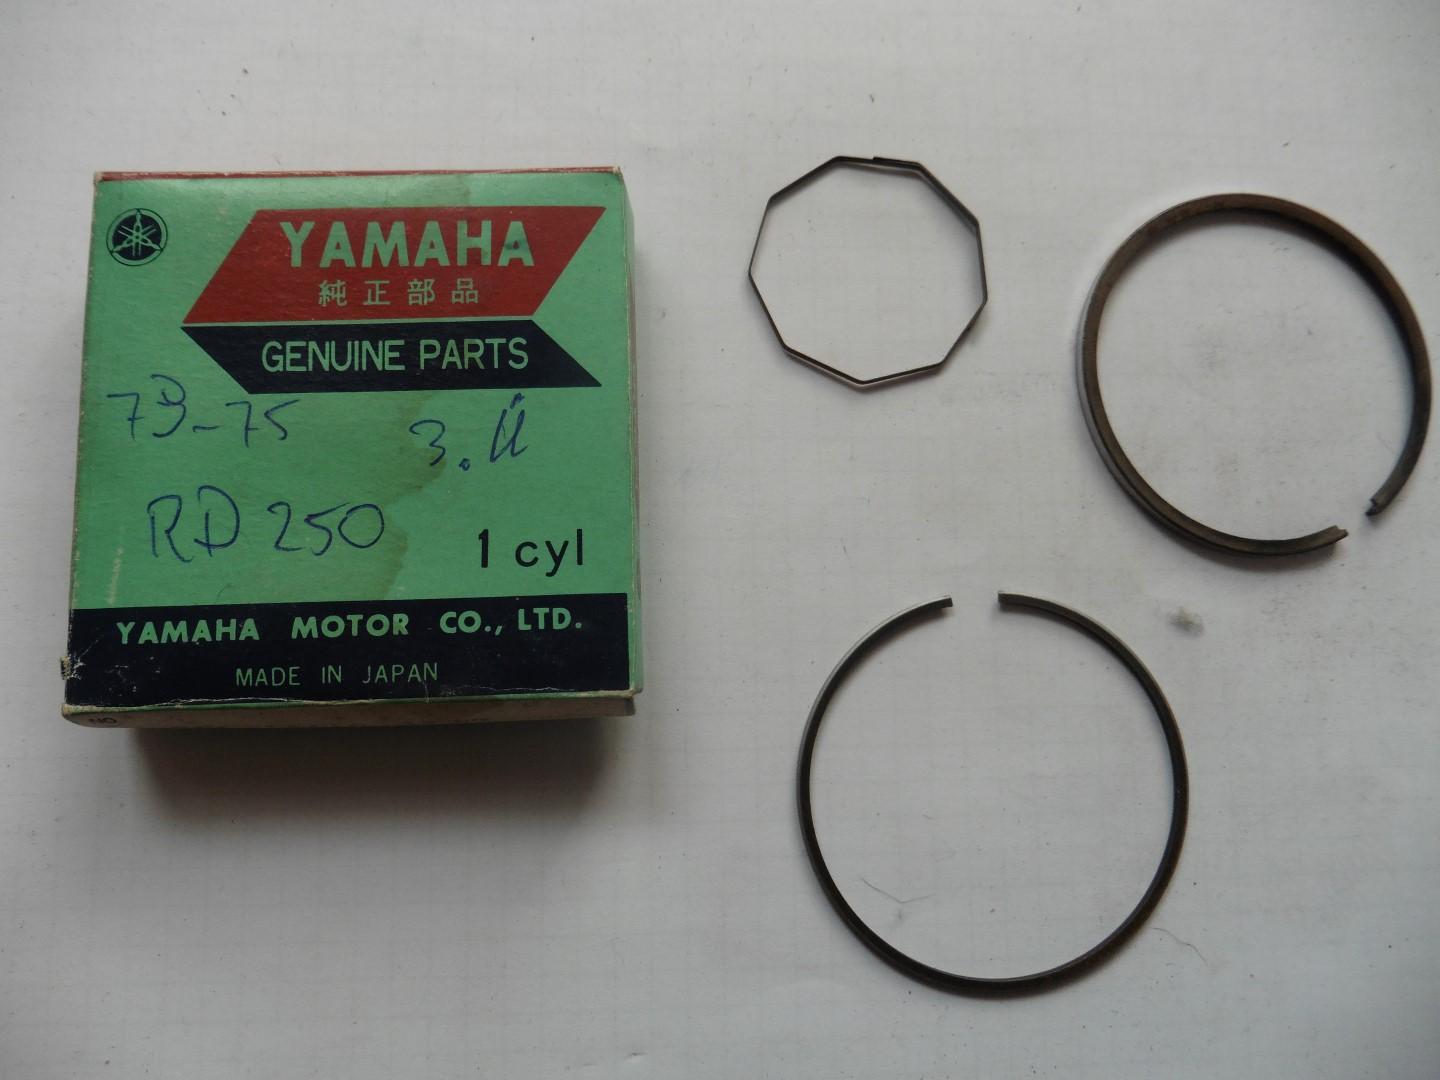 Kolbenringeset + 0,75 3. Üm piston rings kit für Yamaha Rd 250 73-75 361-11610